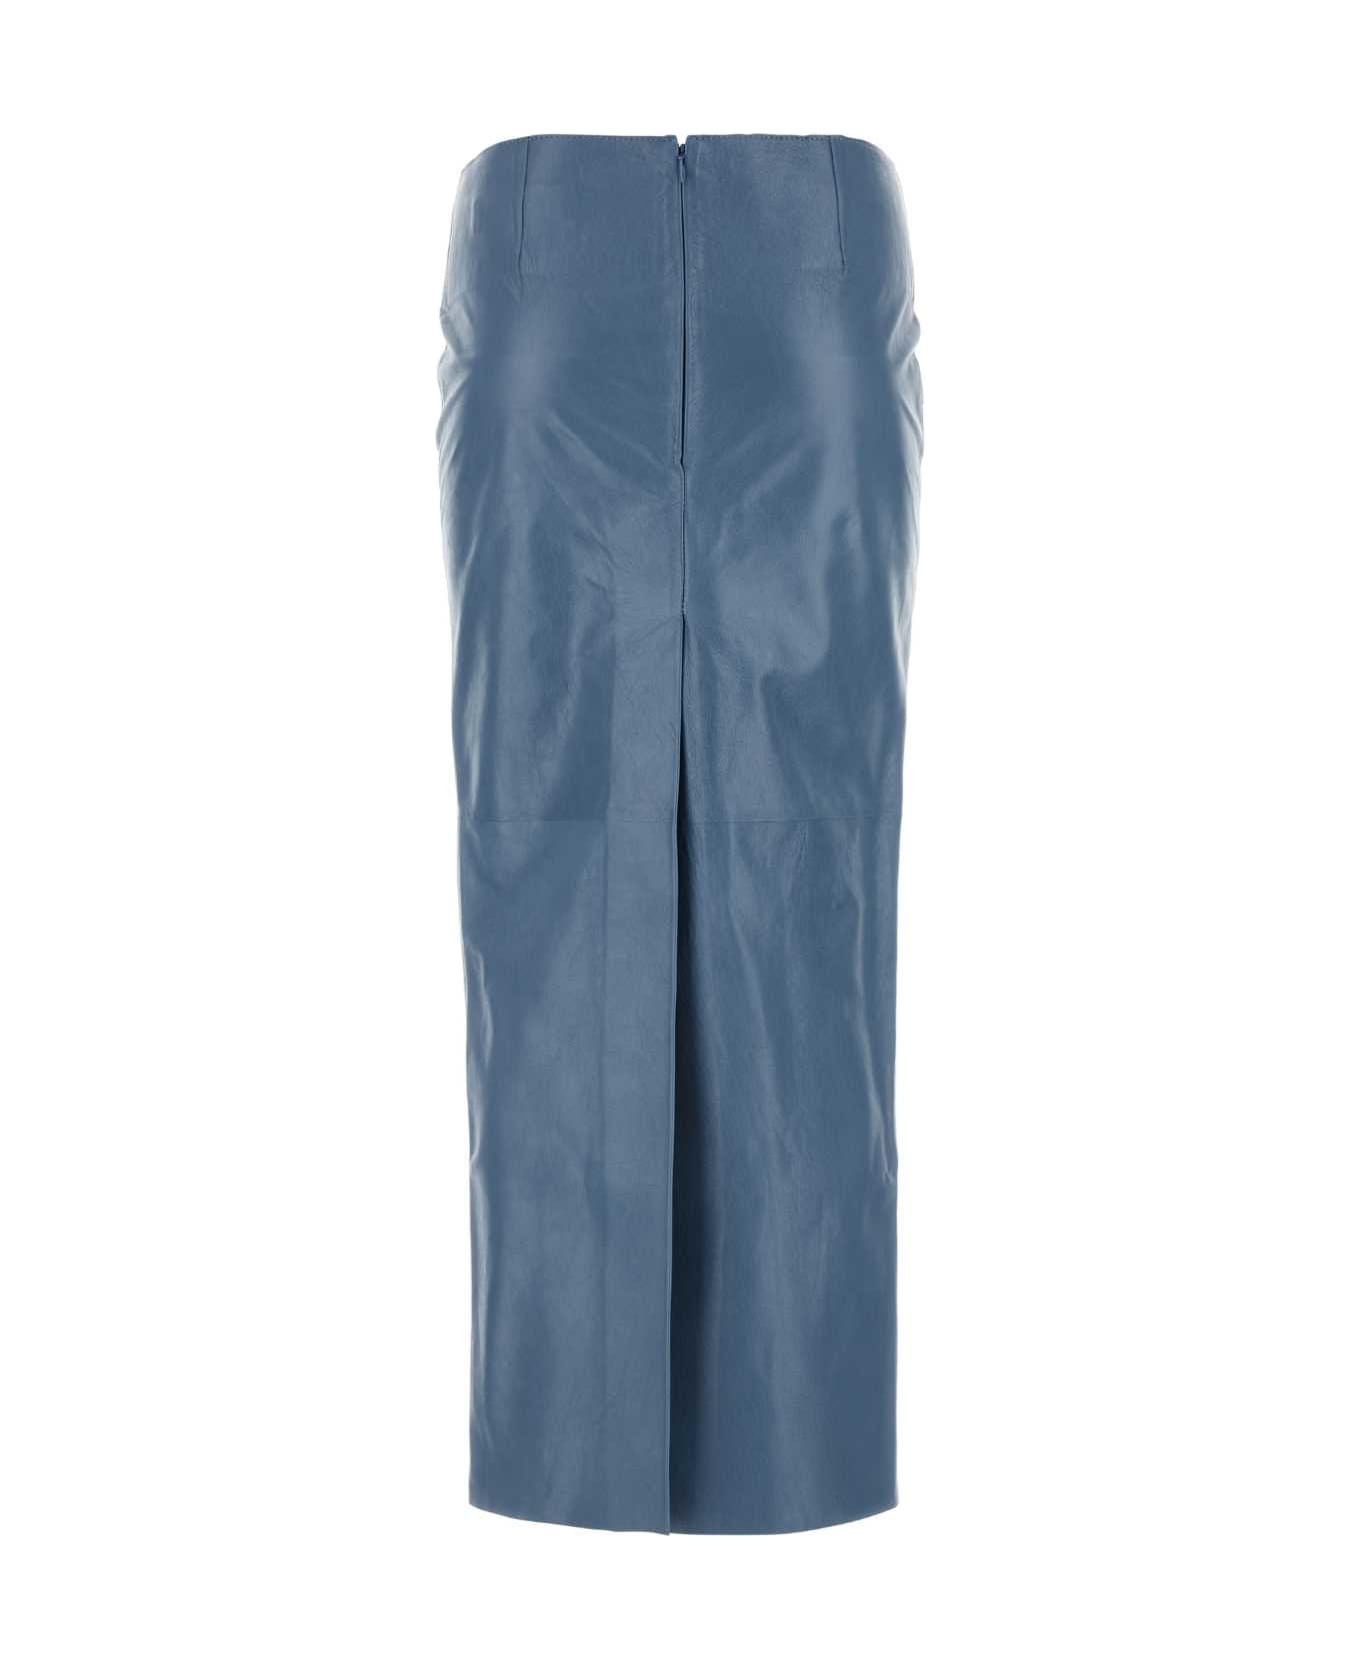 Marni Cerulean Blue Leather Skirt - 00B37